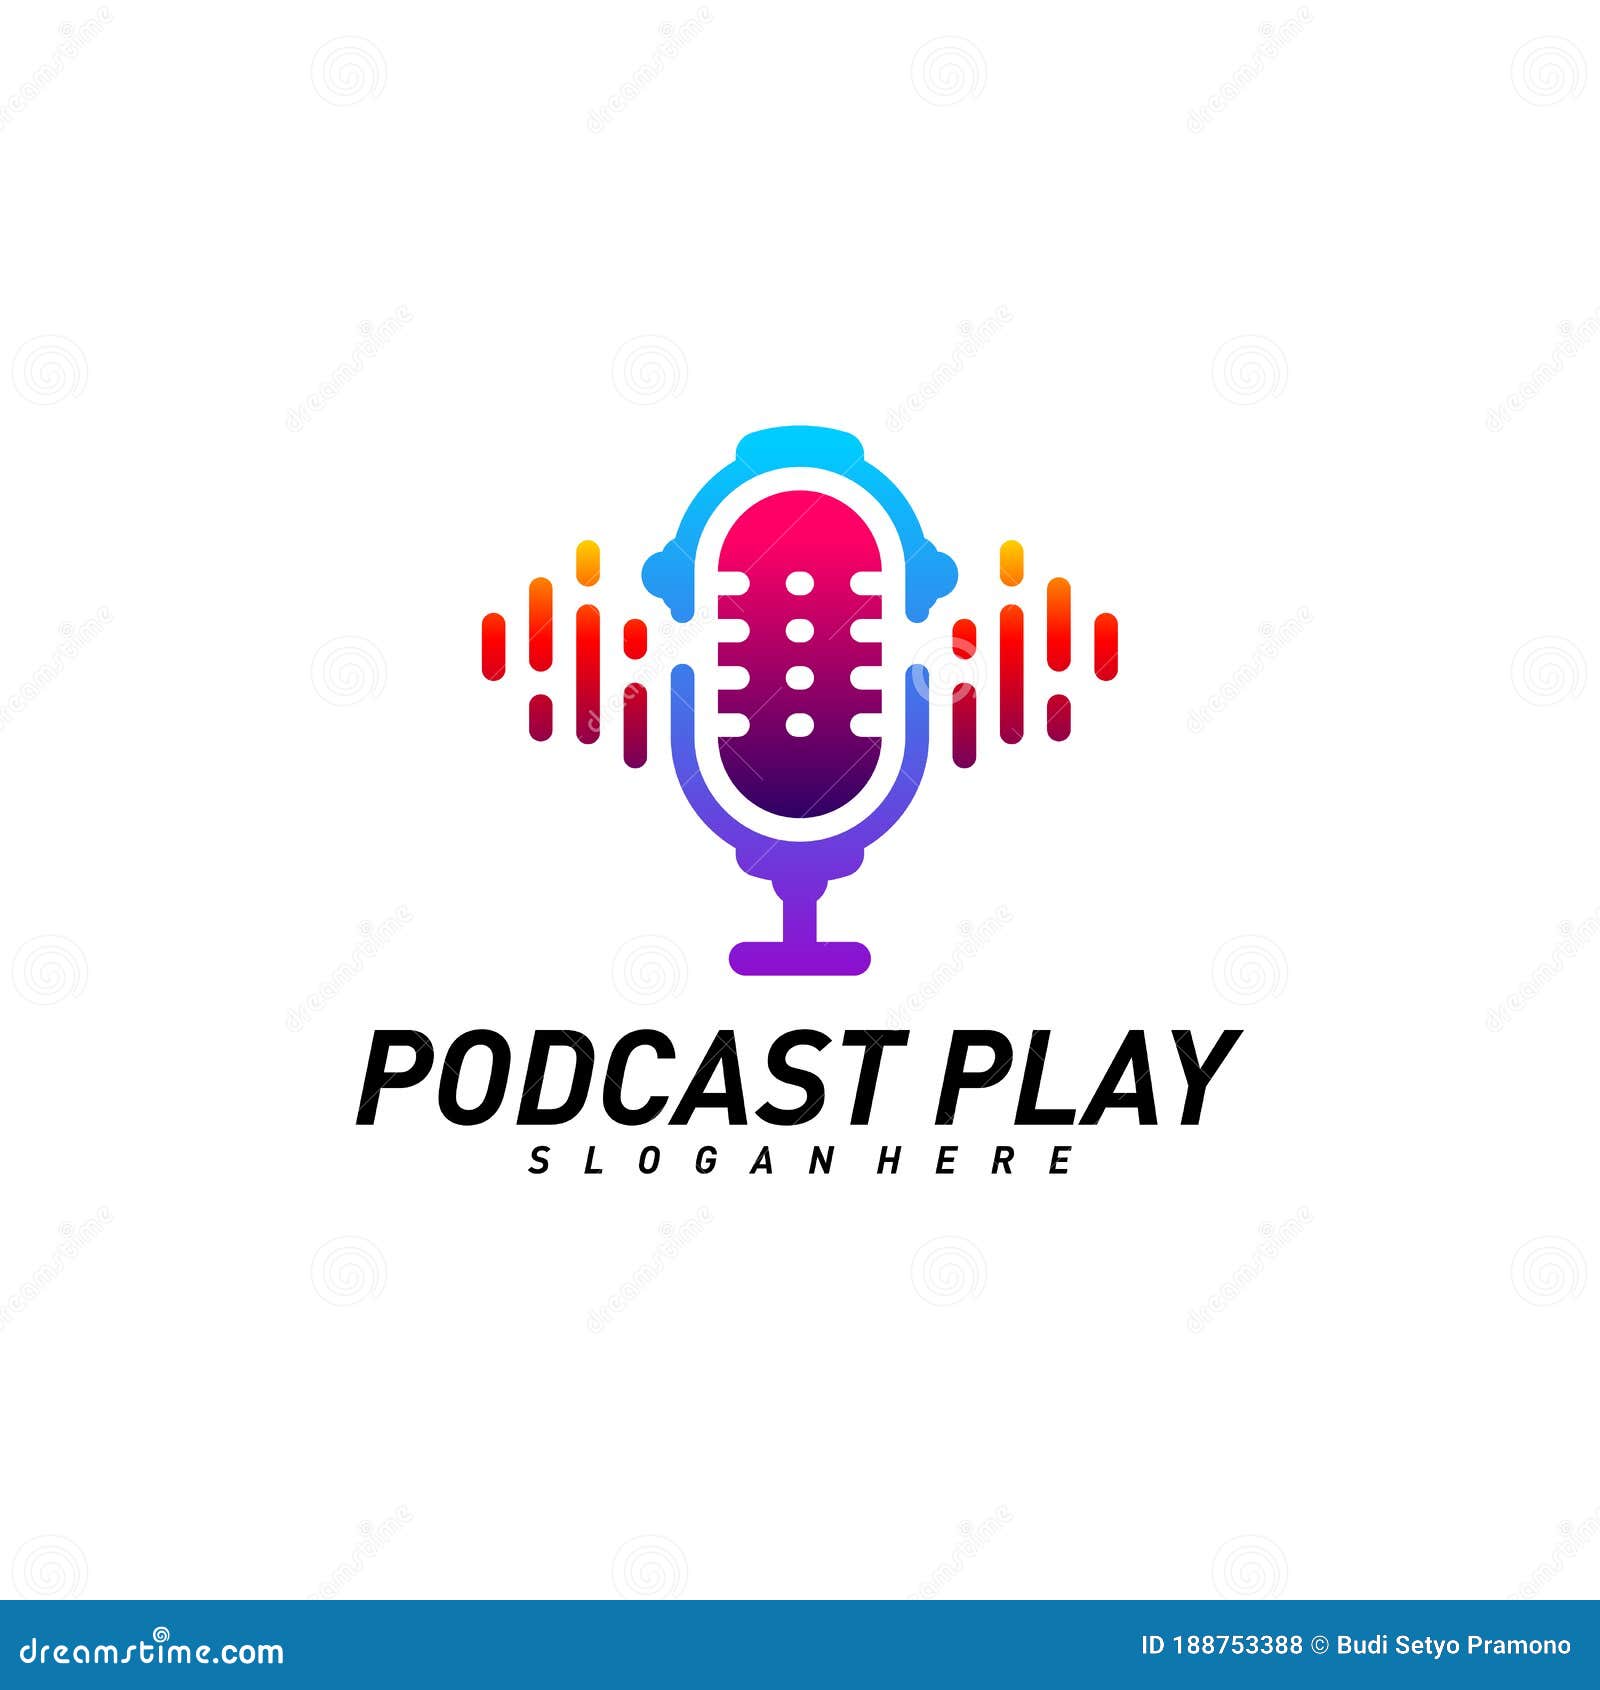 Podcast Creative Design Logo Vector Concept. Play Podcast Logo Template ...